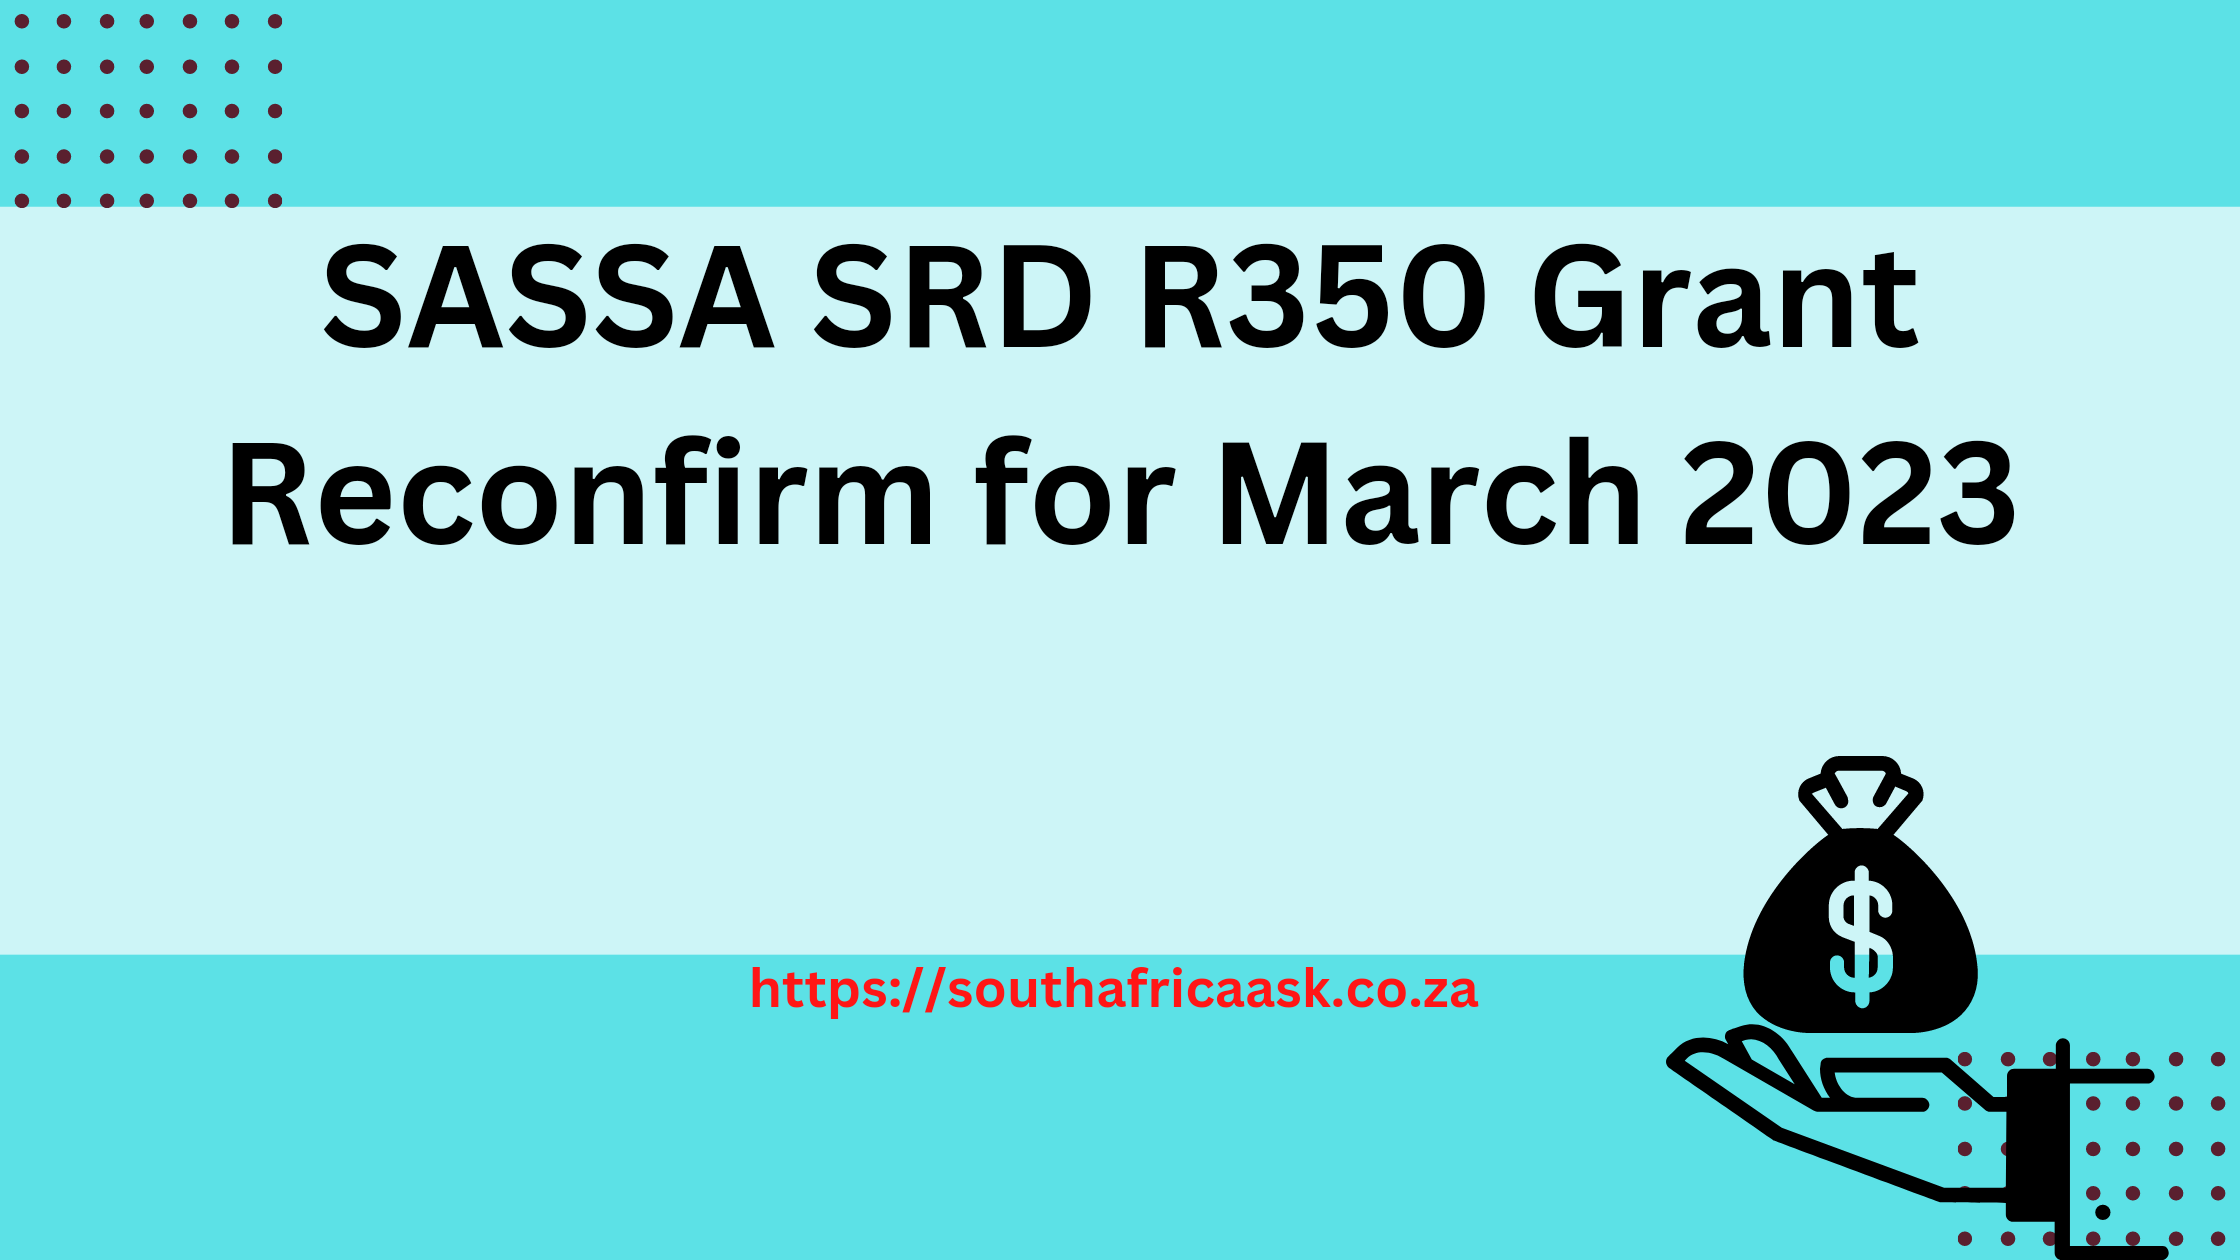 SASSA SRD R350 Grant Reconfirm for March 2023